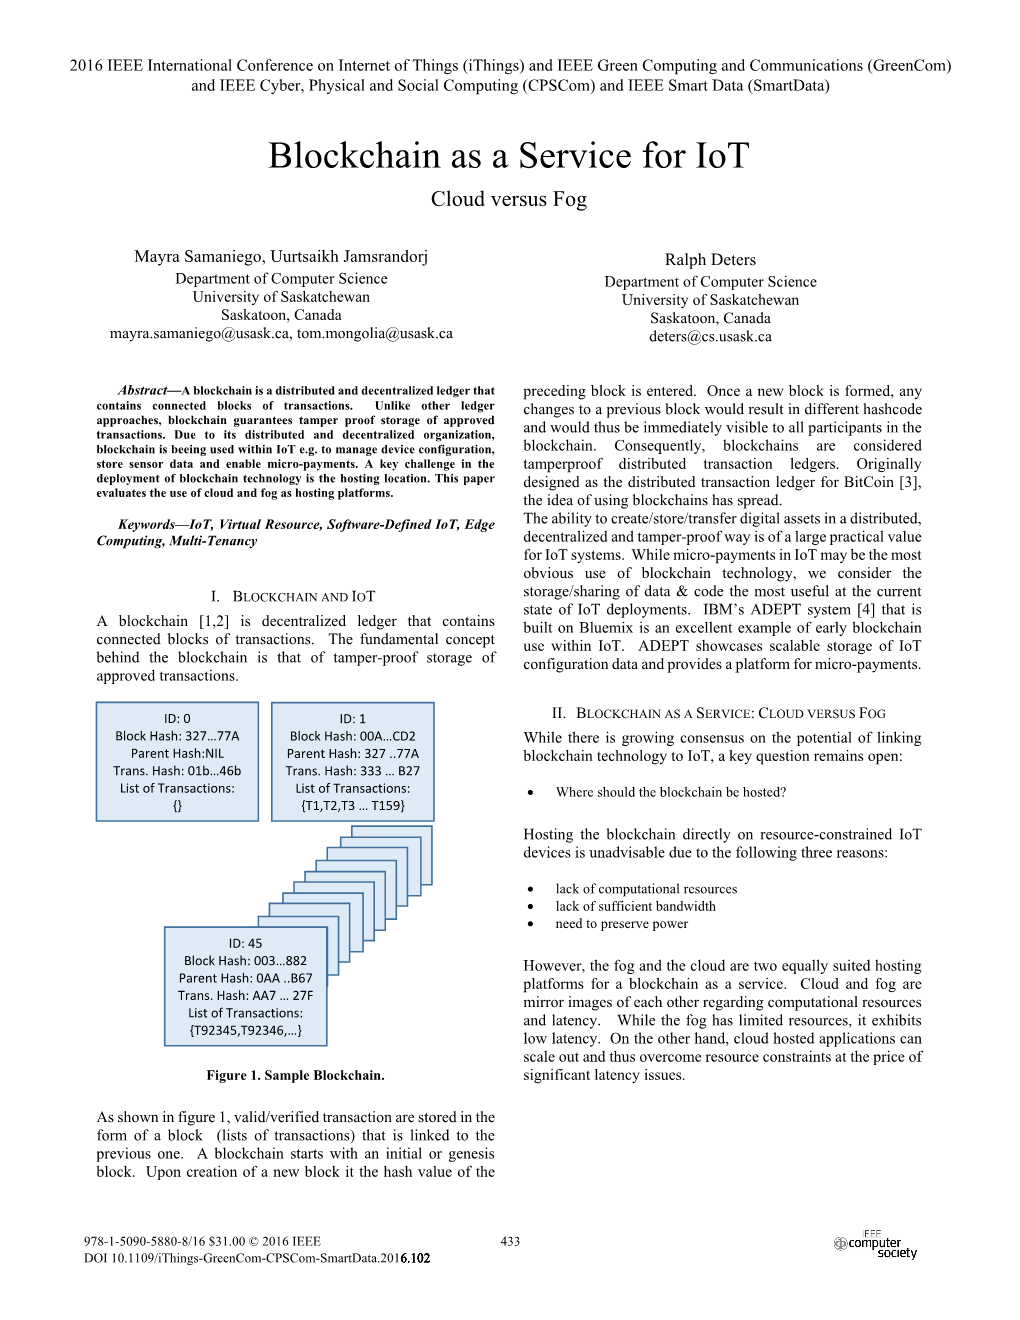 Blockchain As a Service for Iot Cloud Versus Fog